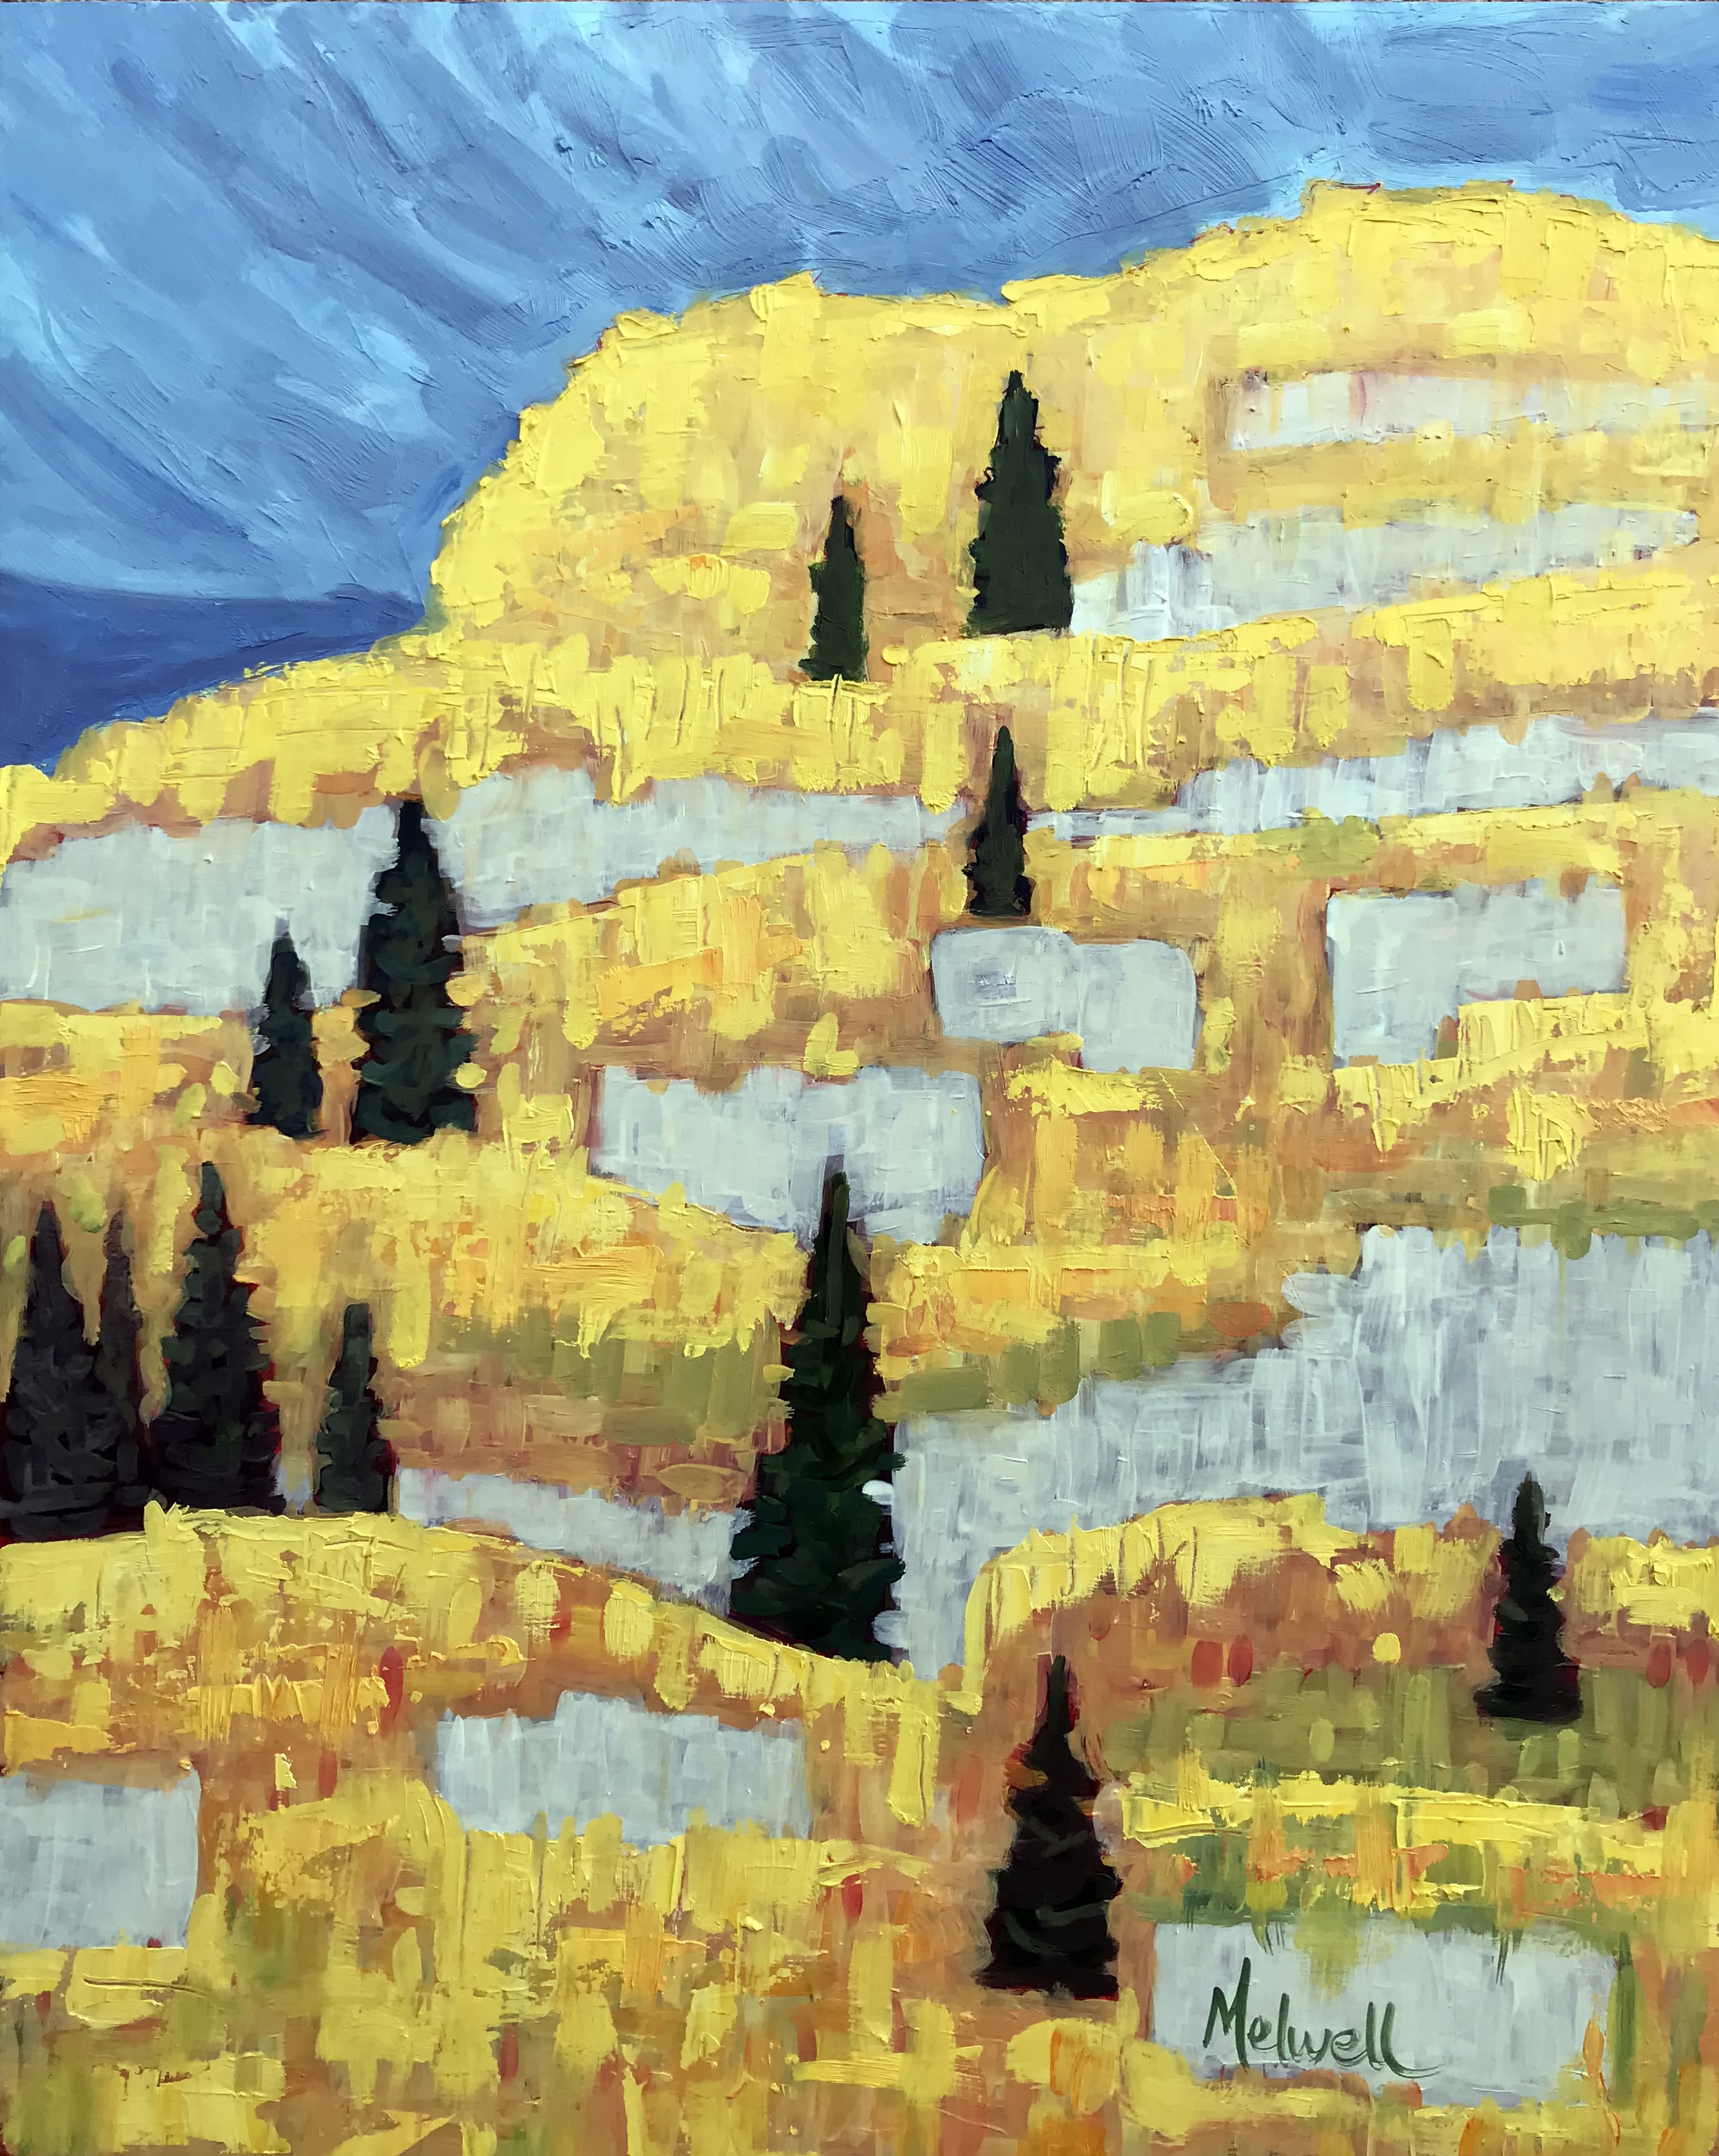 "Aspen Ridge, oil on panel by Melwell, 20x16